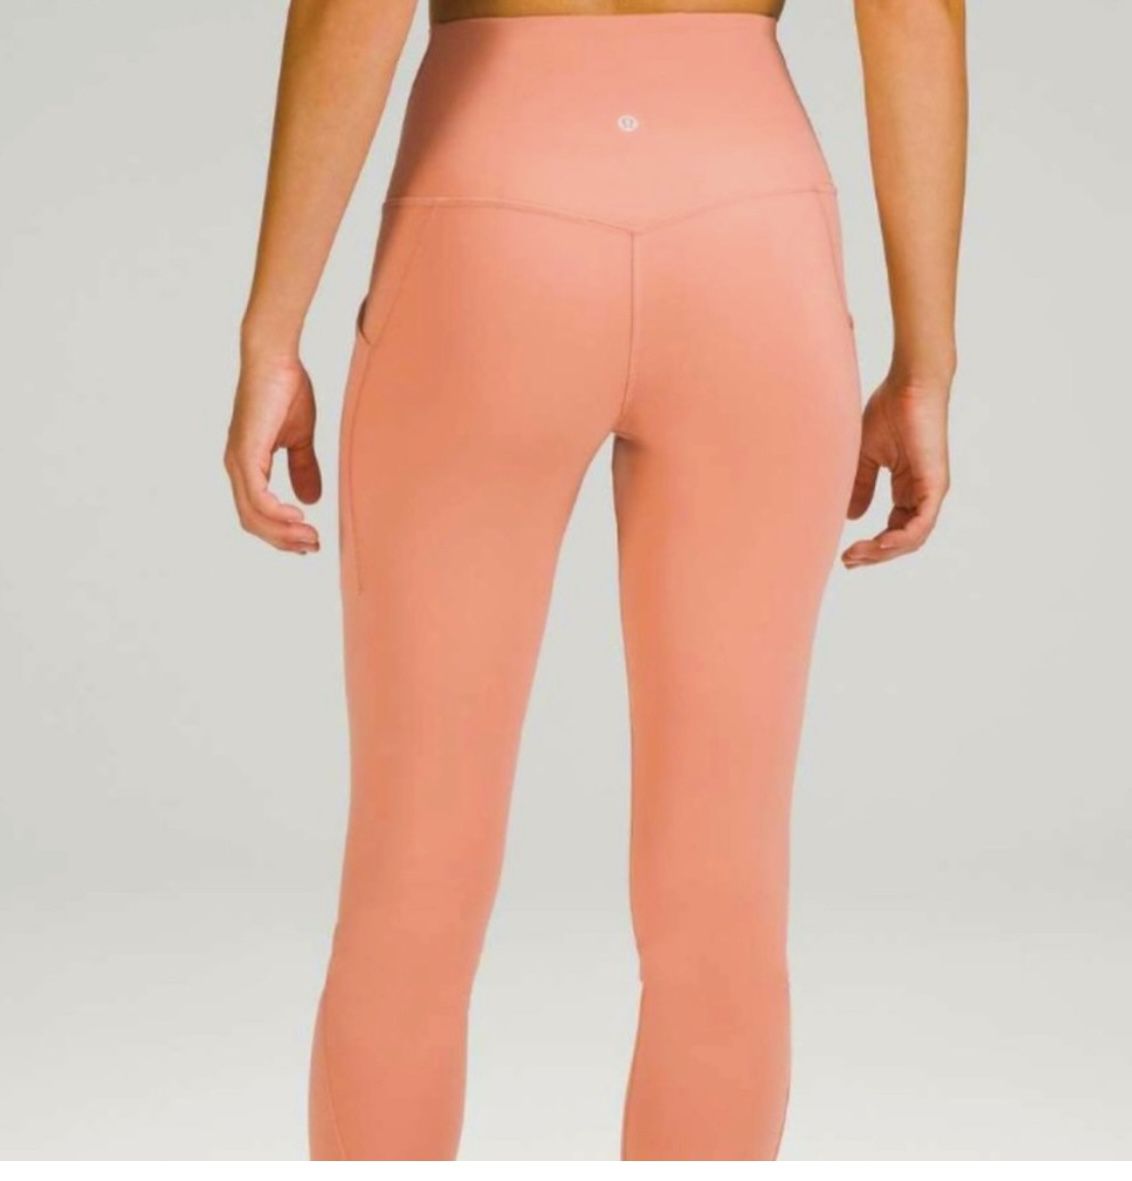 Lululemon || Align High-Rise Pant with Pockets 25" Pink Savannah, size: 4| lululemon athletica